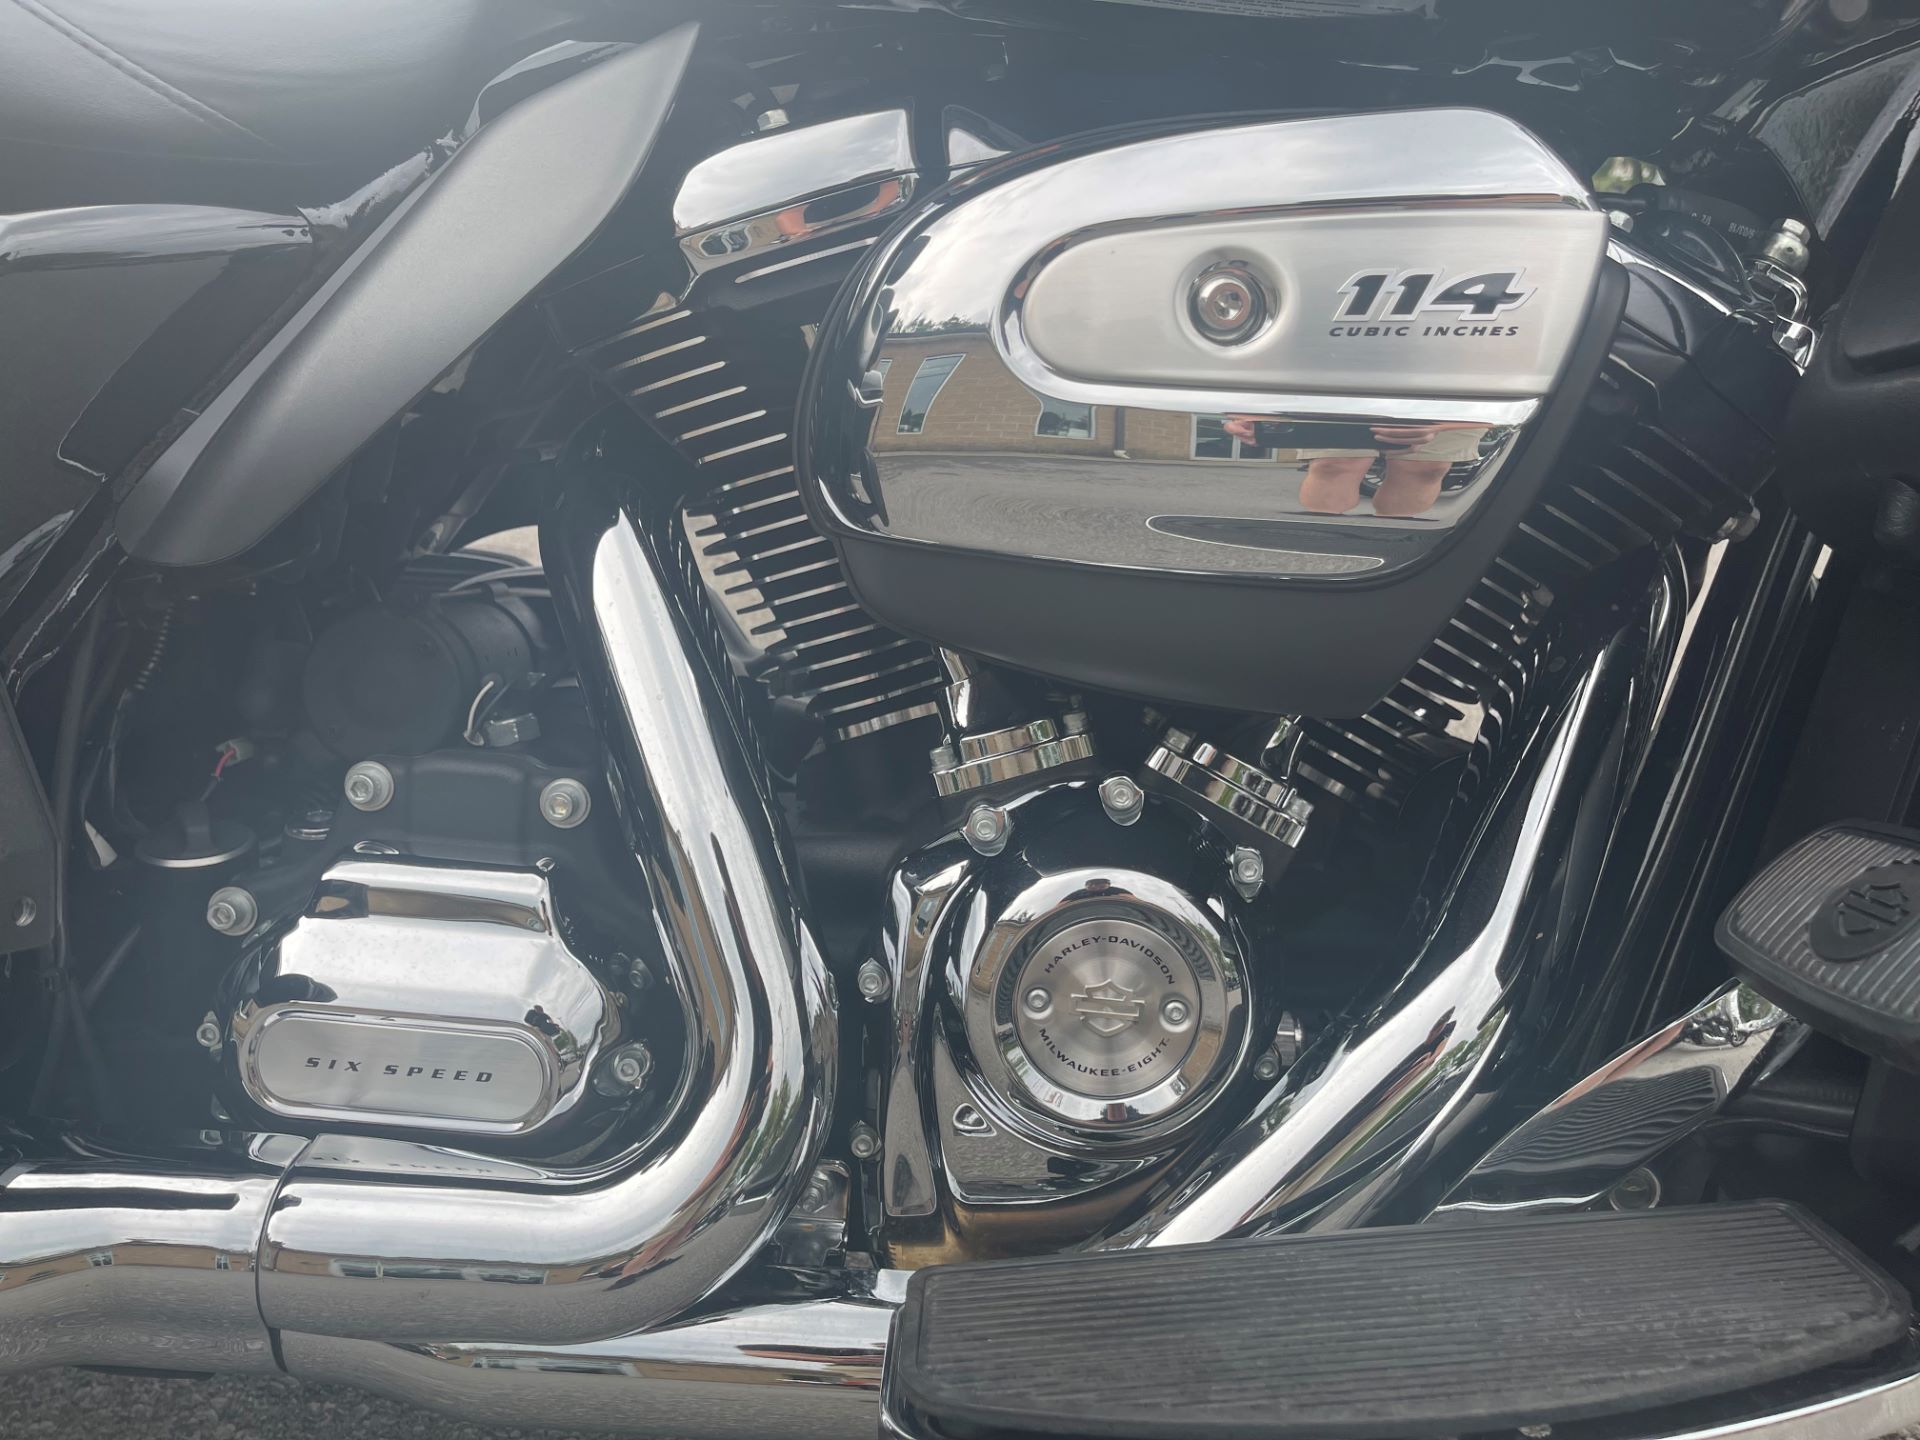 2020 Harley-Davidson Ultra Limited in Chicora, Pennsylvania - Photo 10